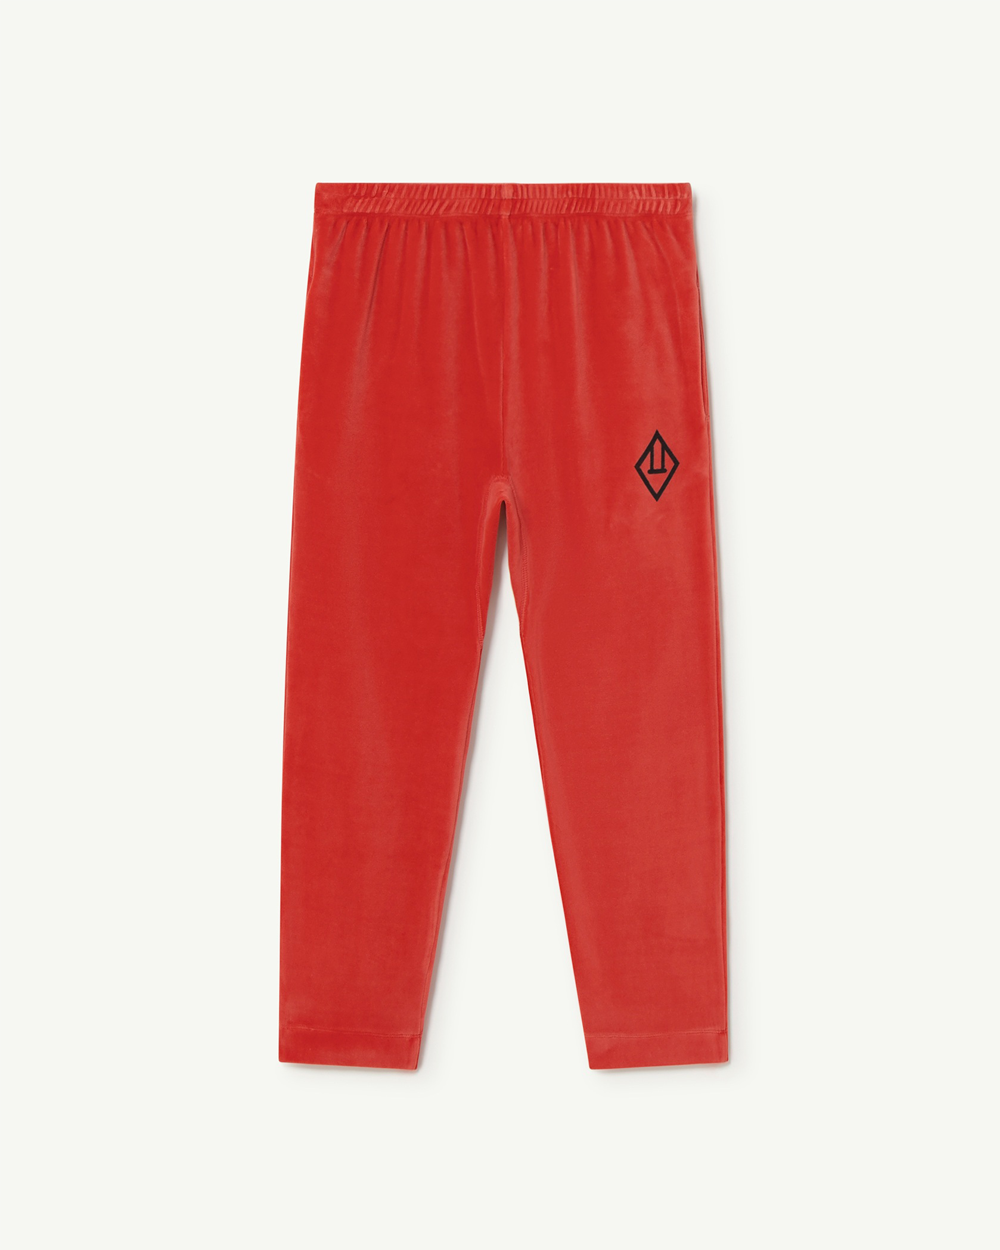 [TAO]F22020-185_AX /VELVET CAMALEON KIDS PANTS Red_Logo [4Y]